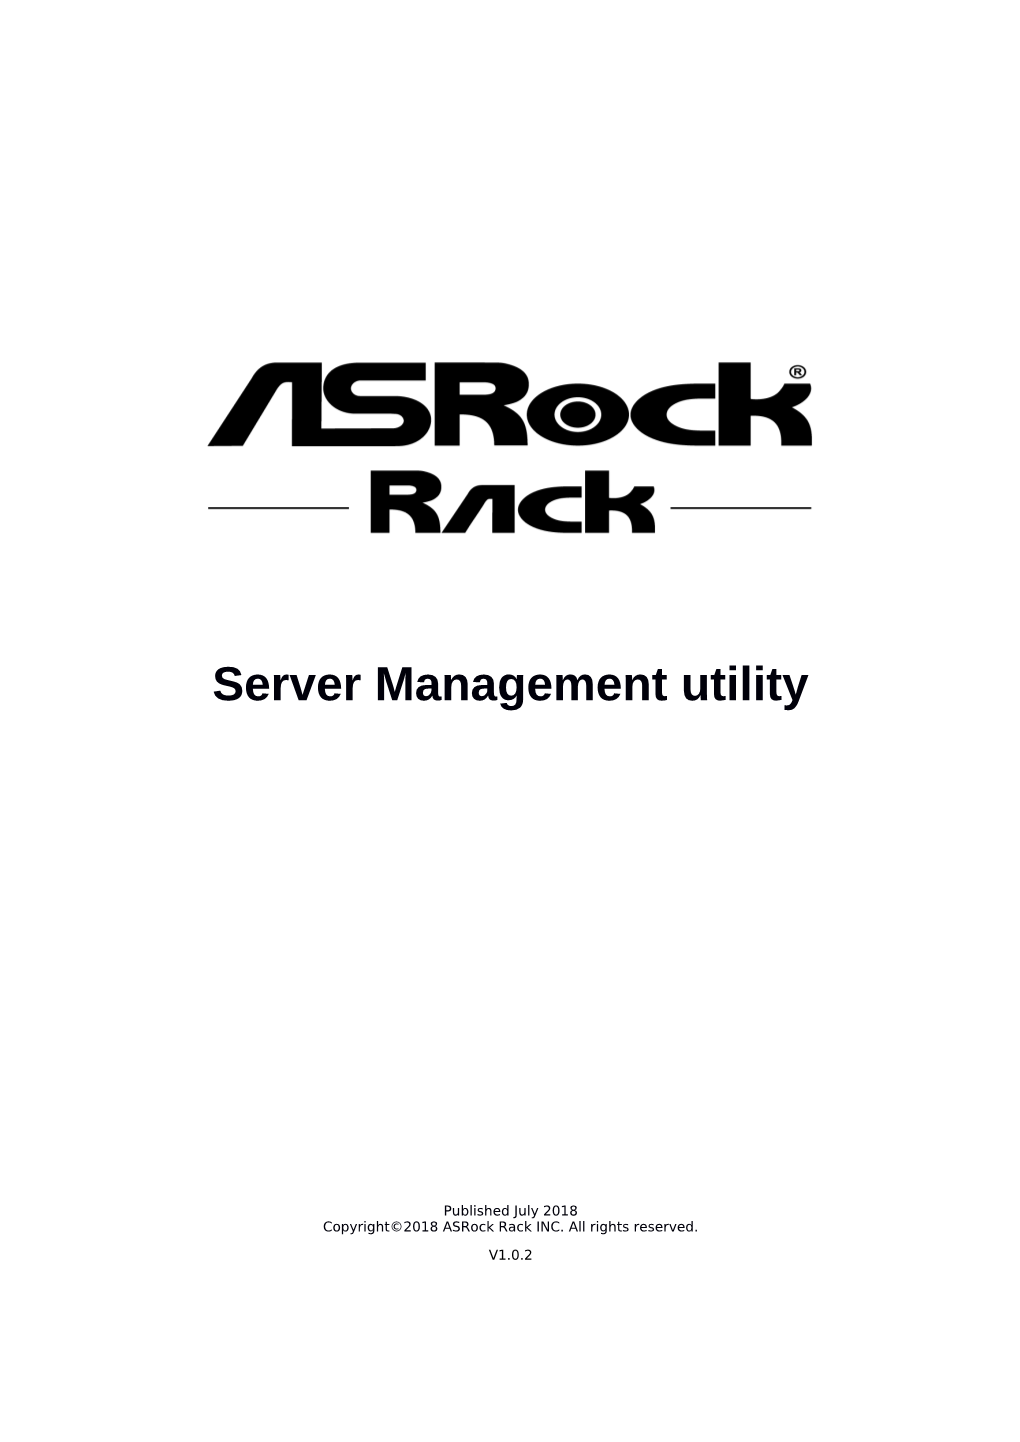 Server Management Utility